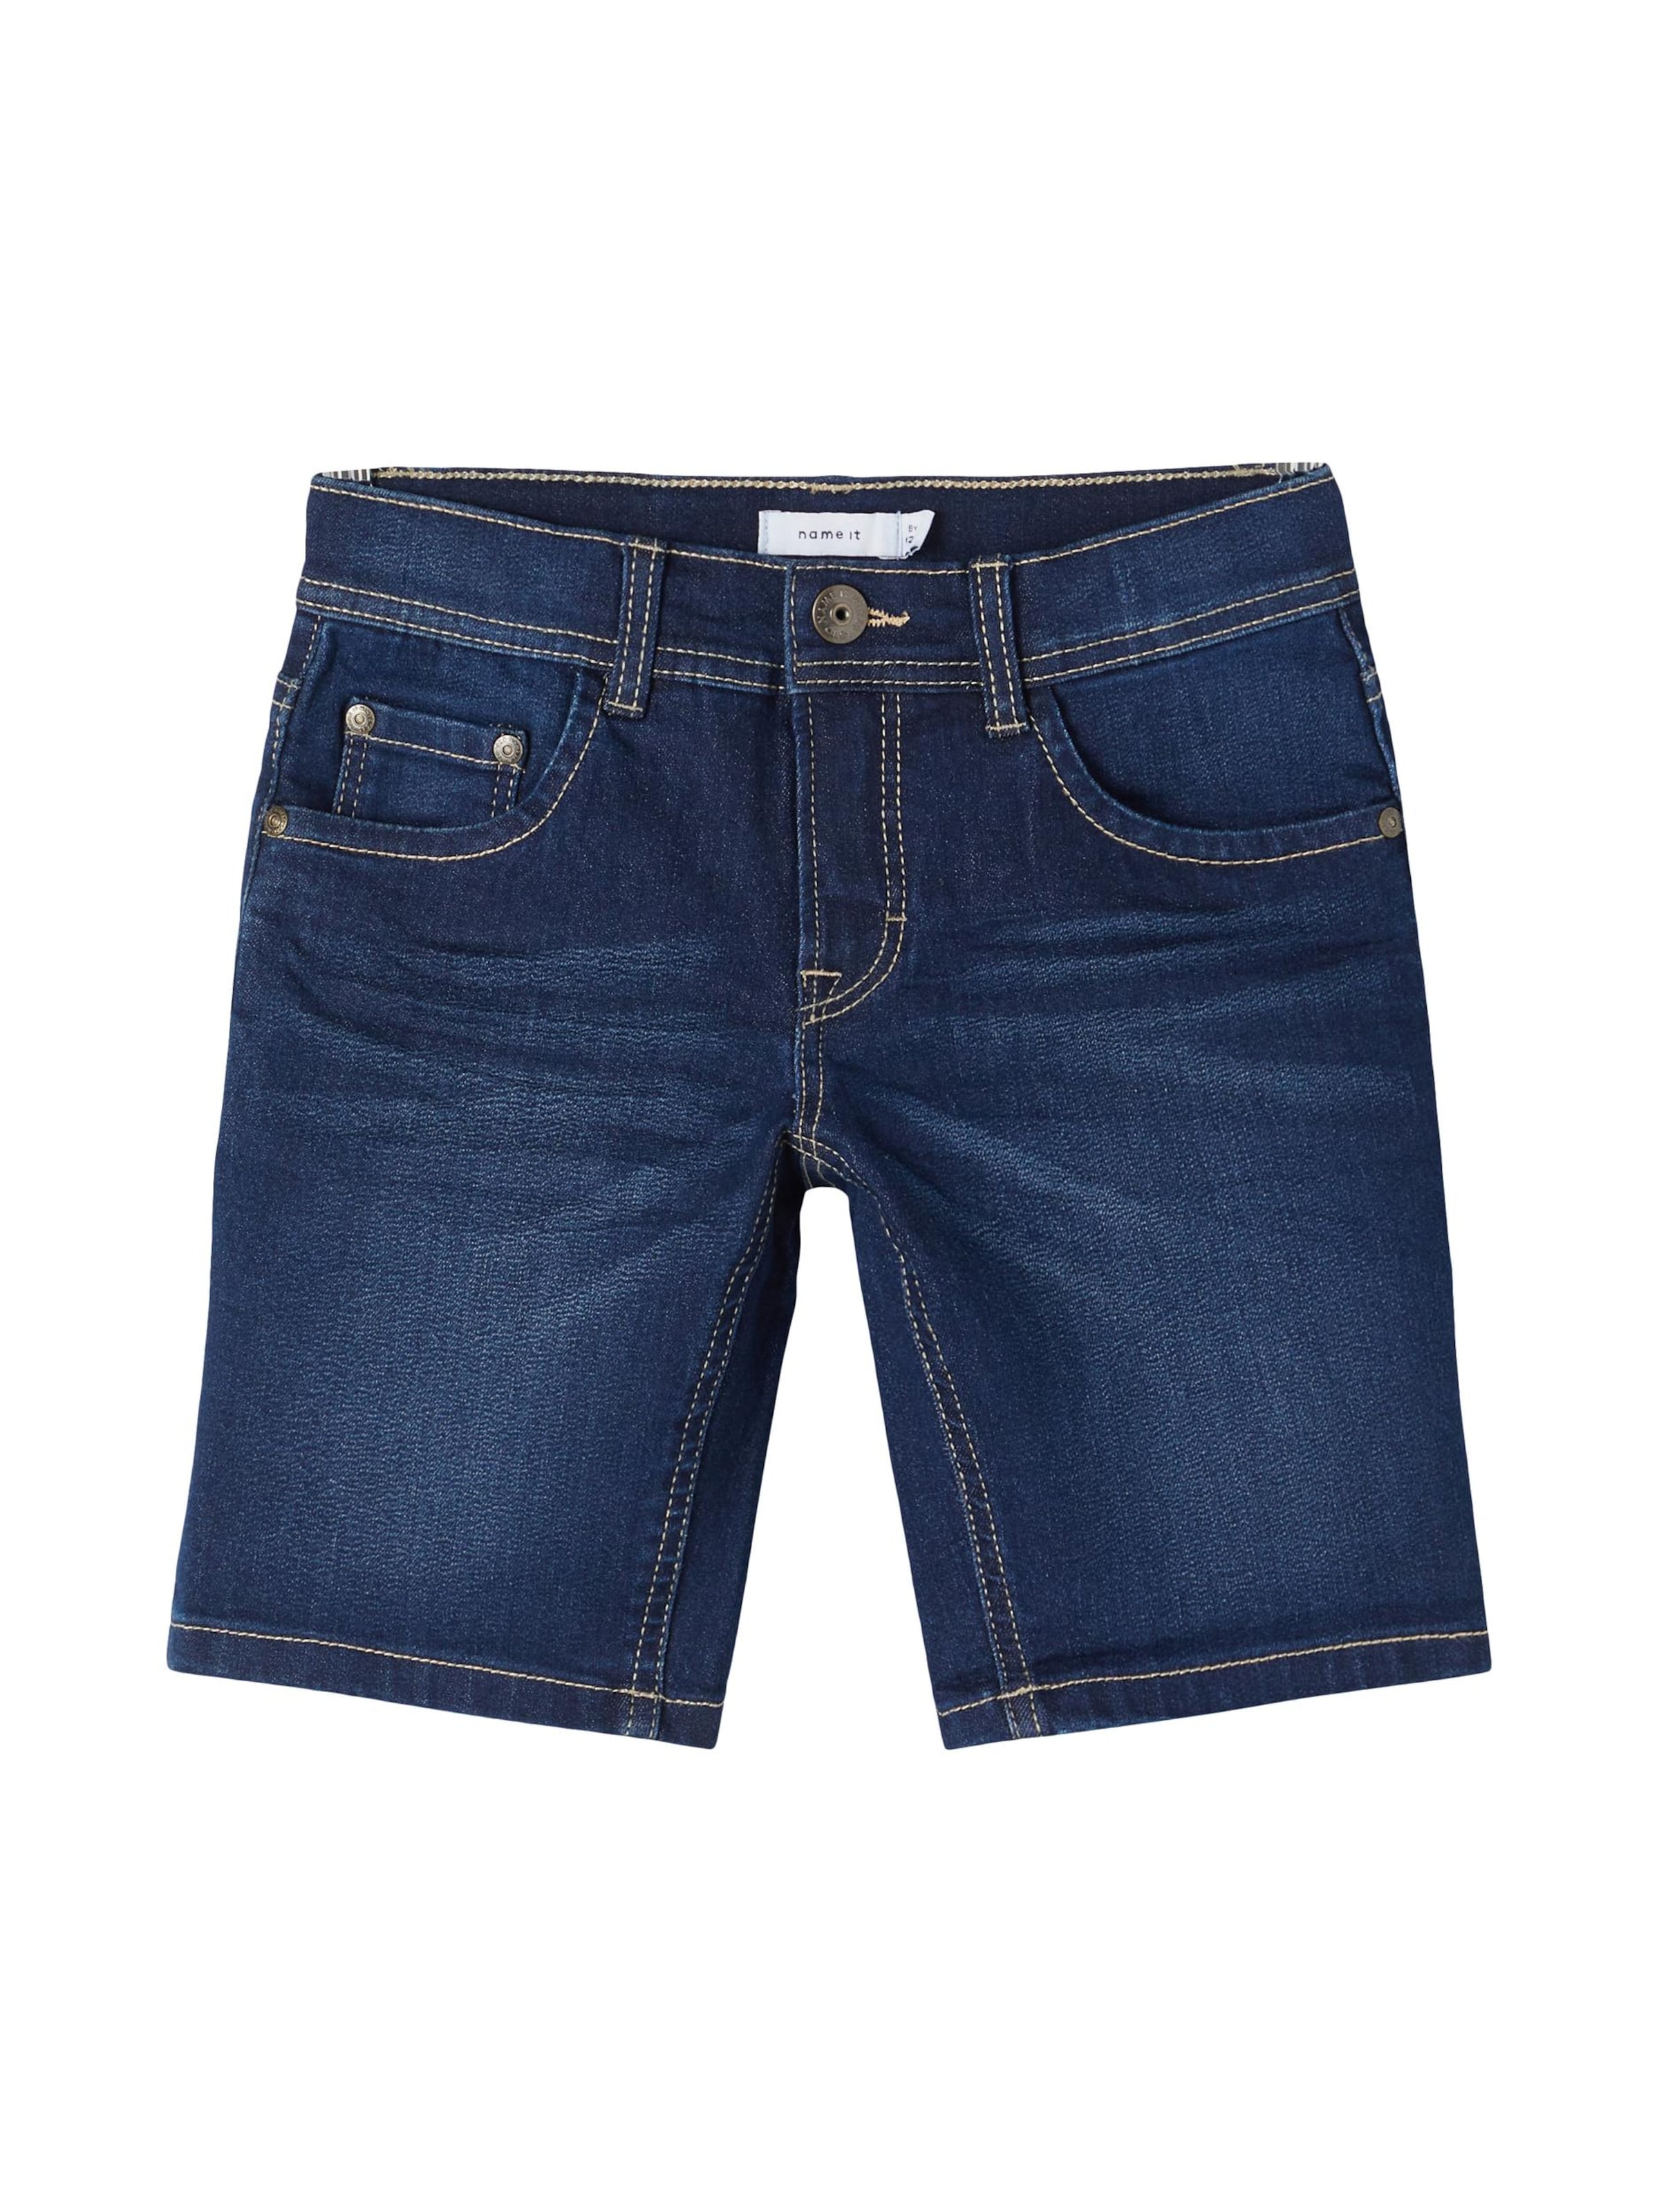 DAMEN Jeans Print Orange 40 Rabatt 75 % Primark Shorts jeans 